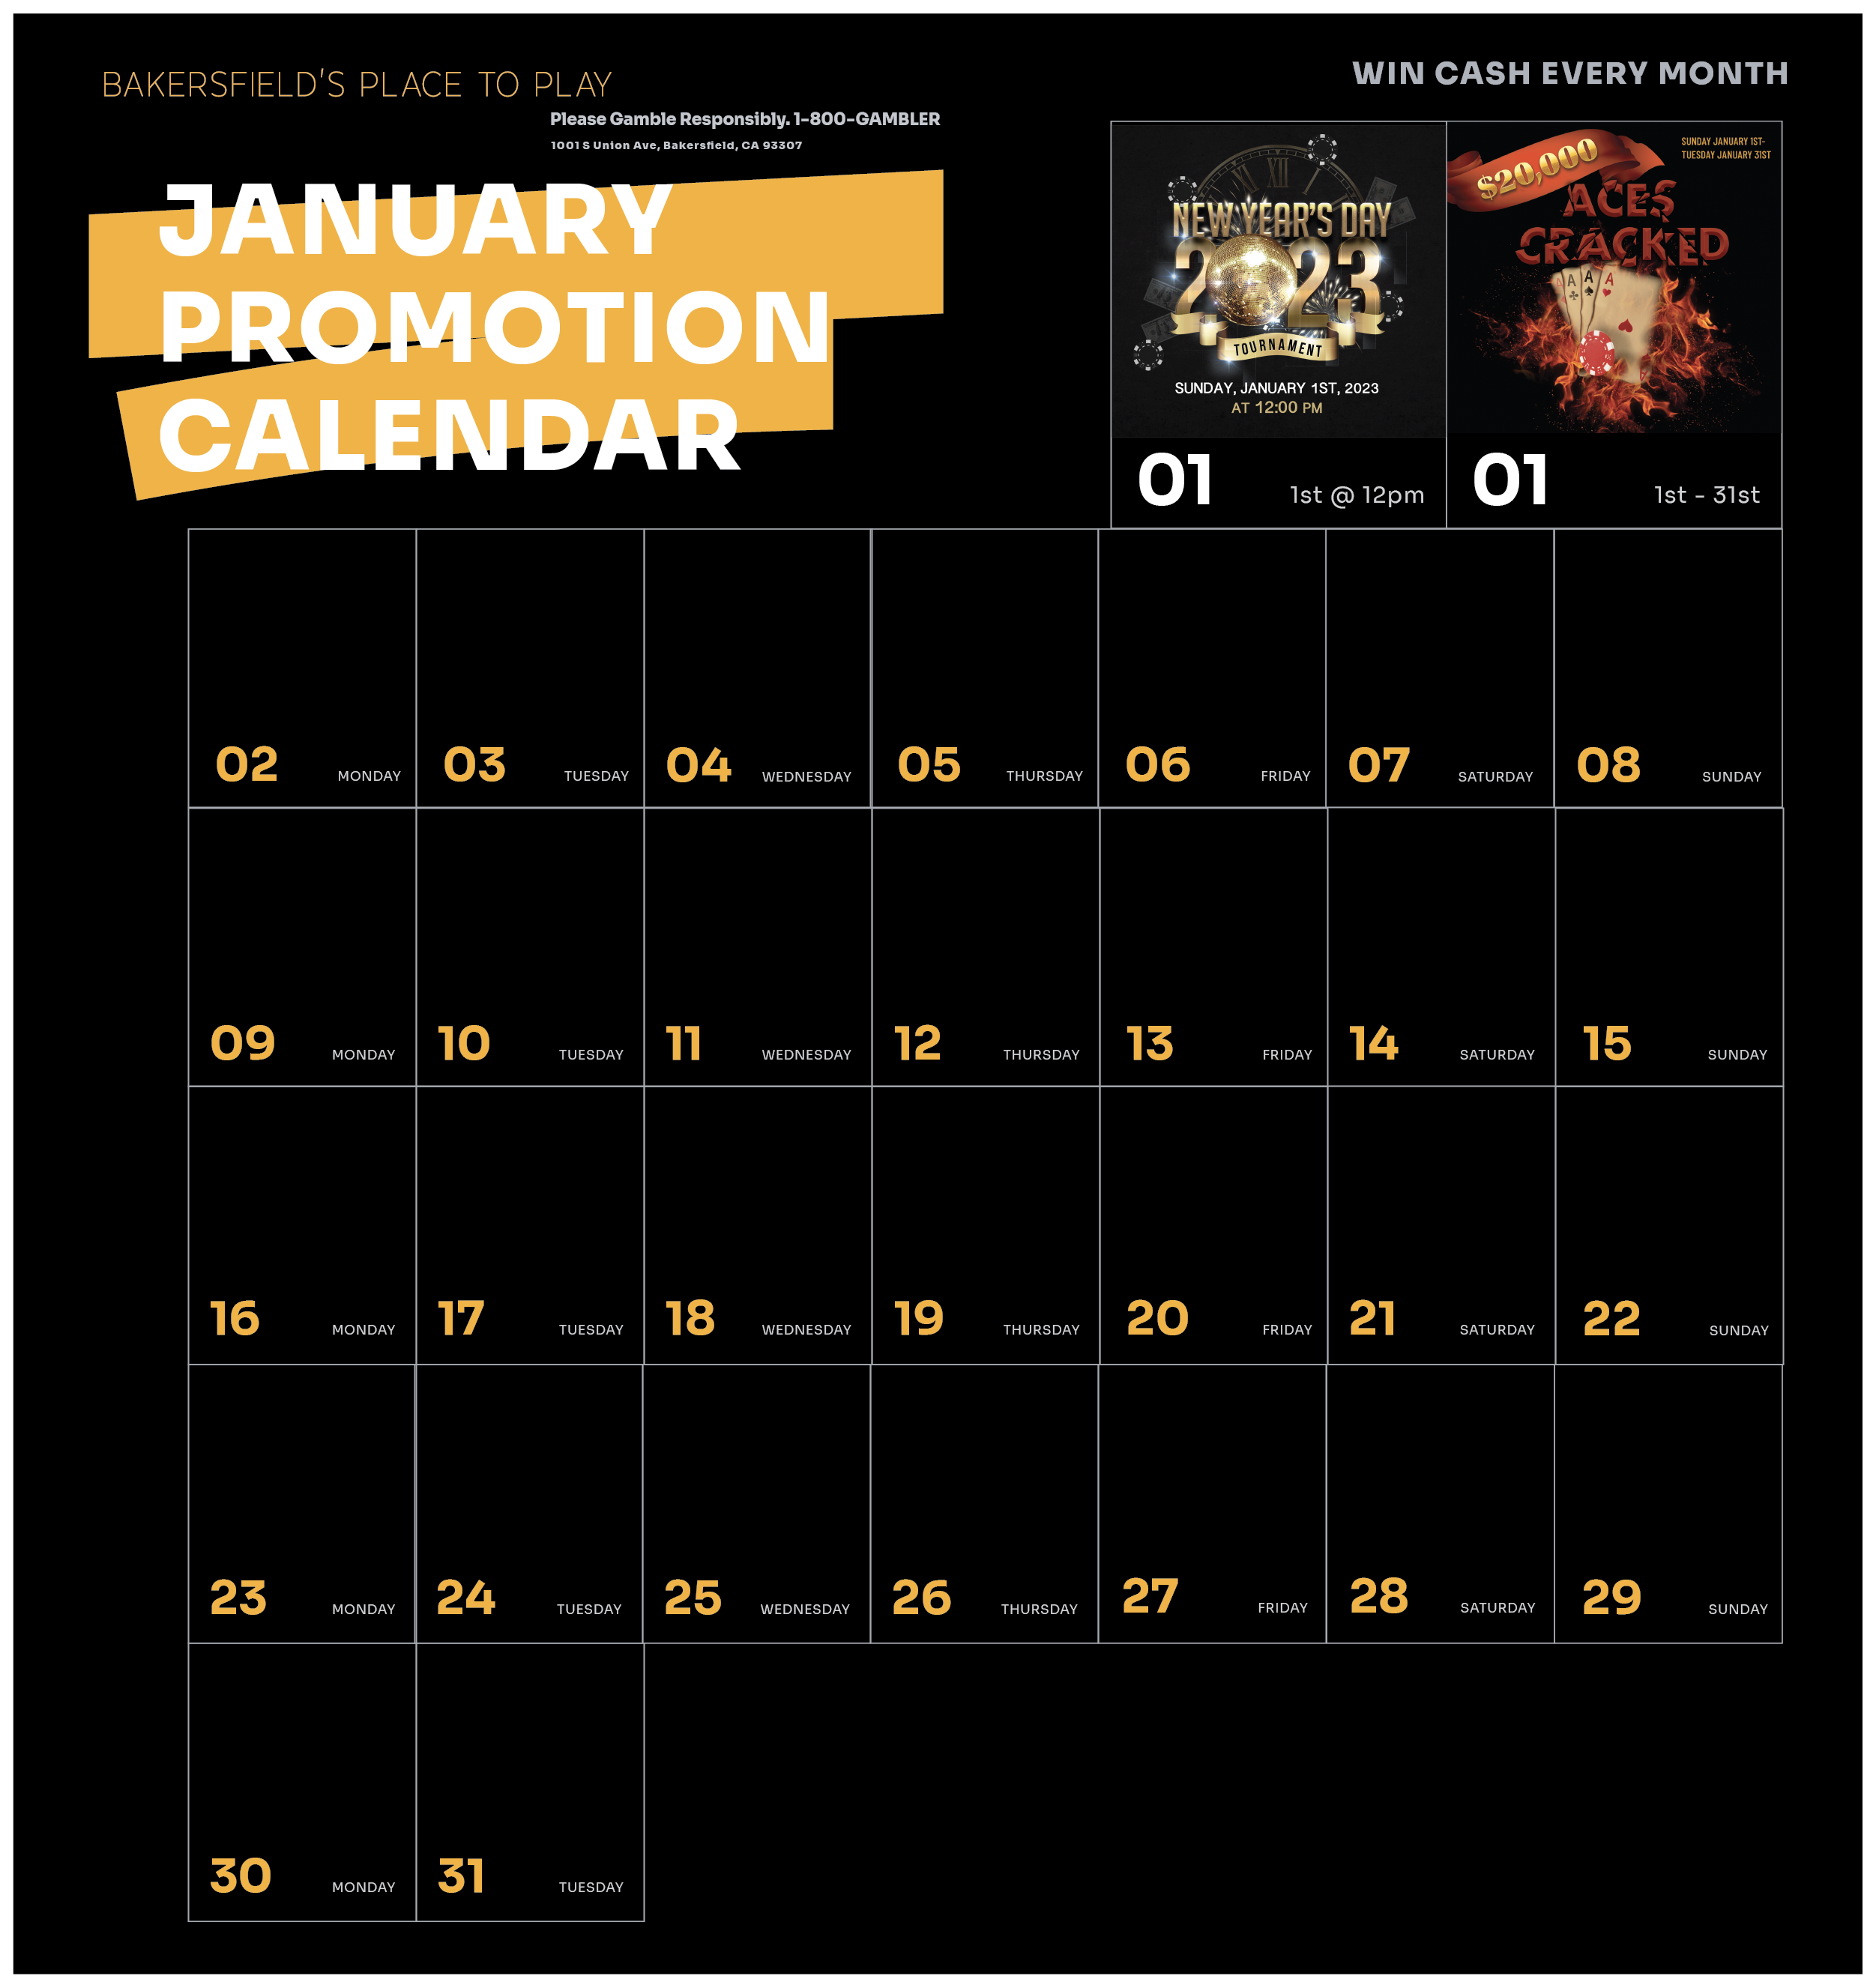 Monthly Calendar Golden West Casino